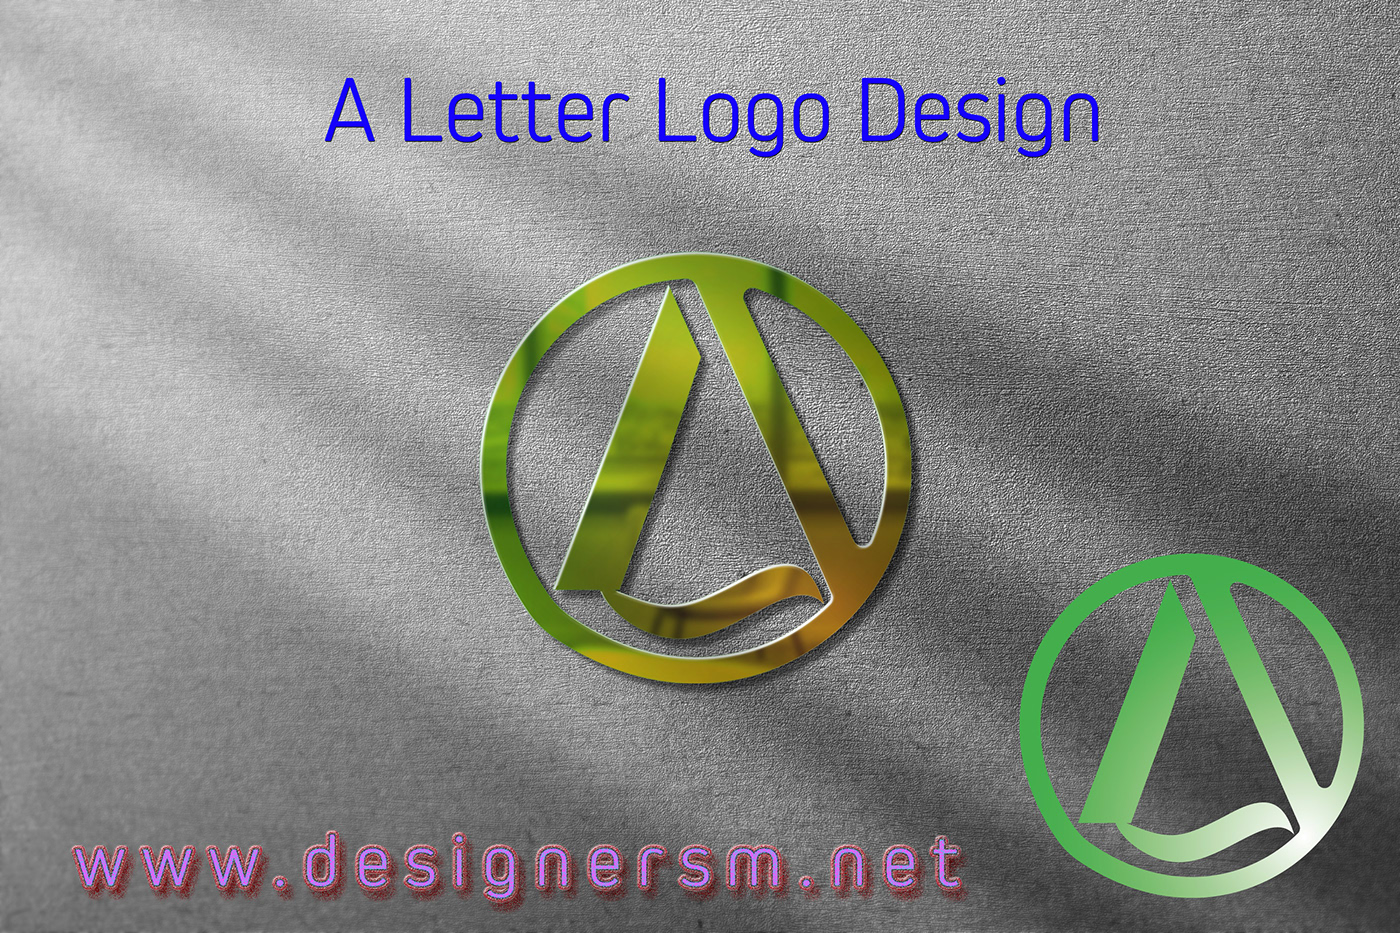 a letter logo design a word design Logo Design logo design ideas logo text font word design